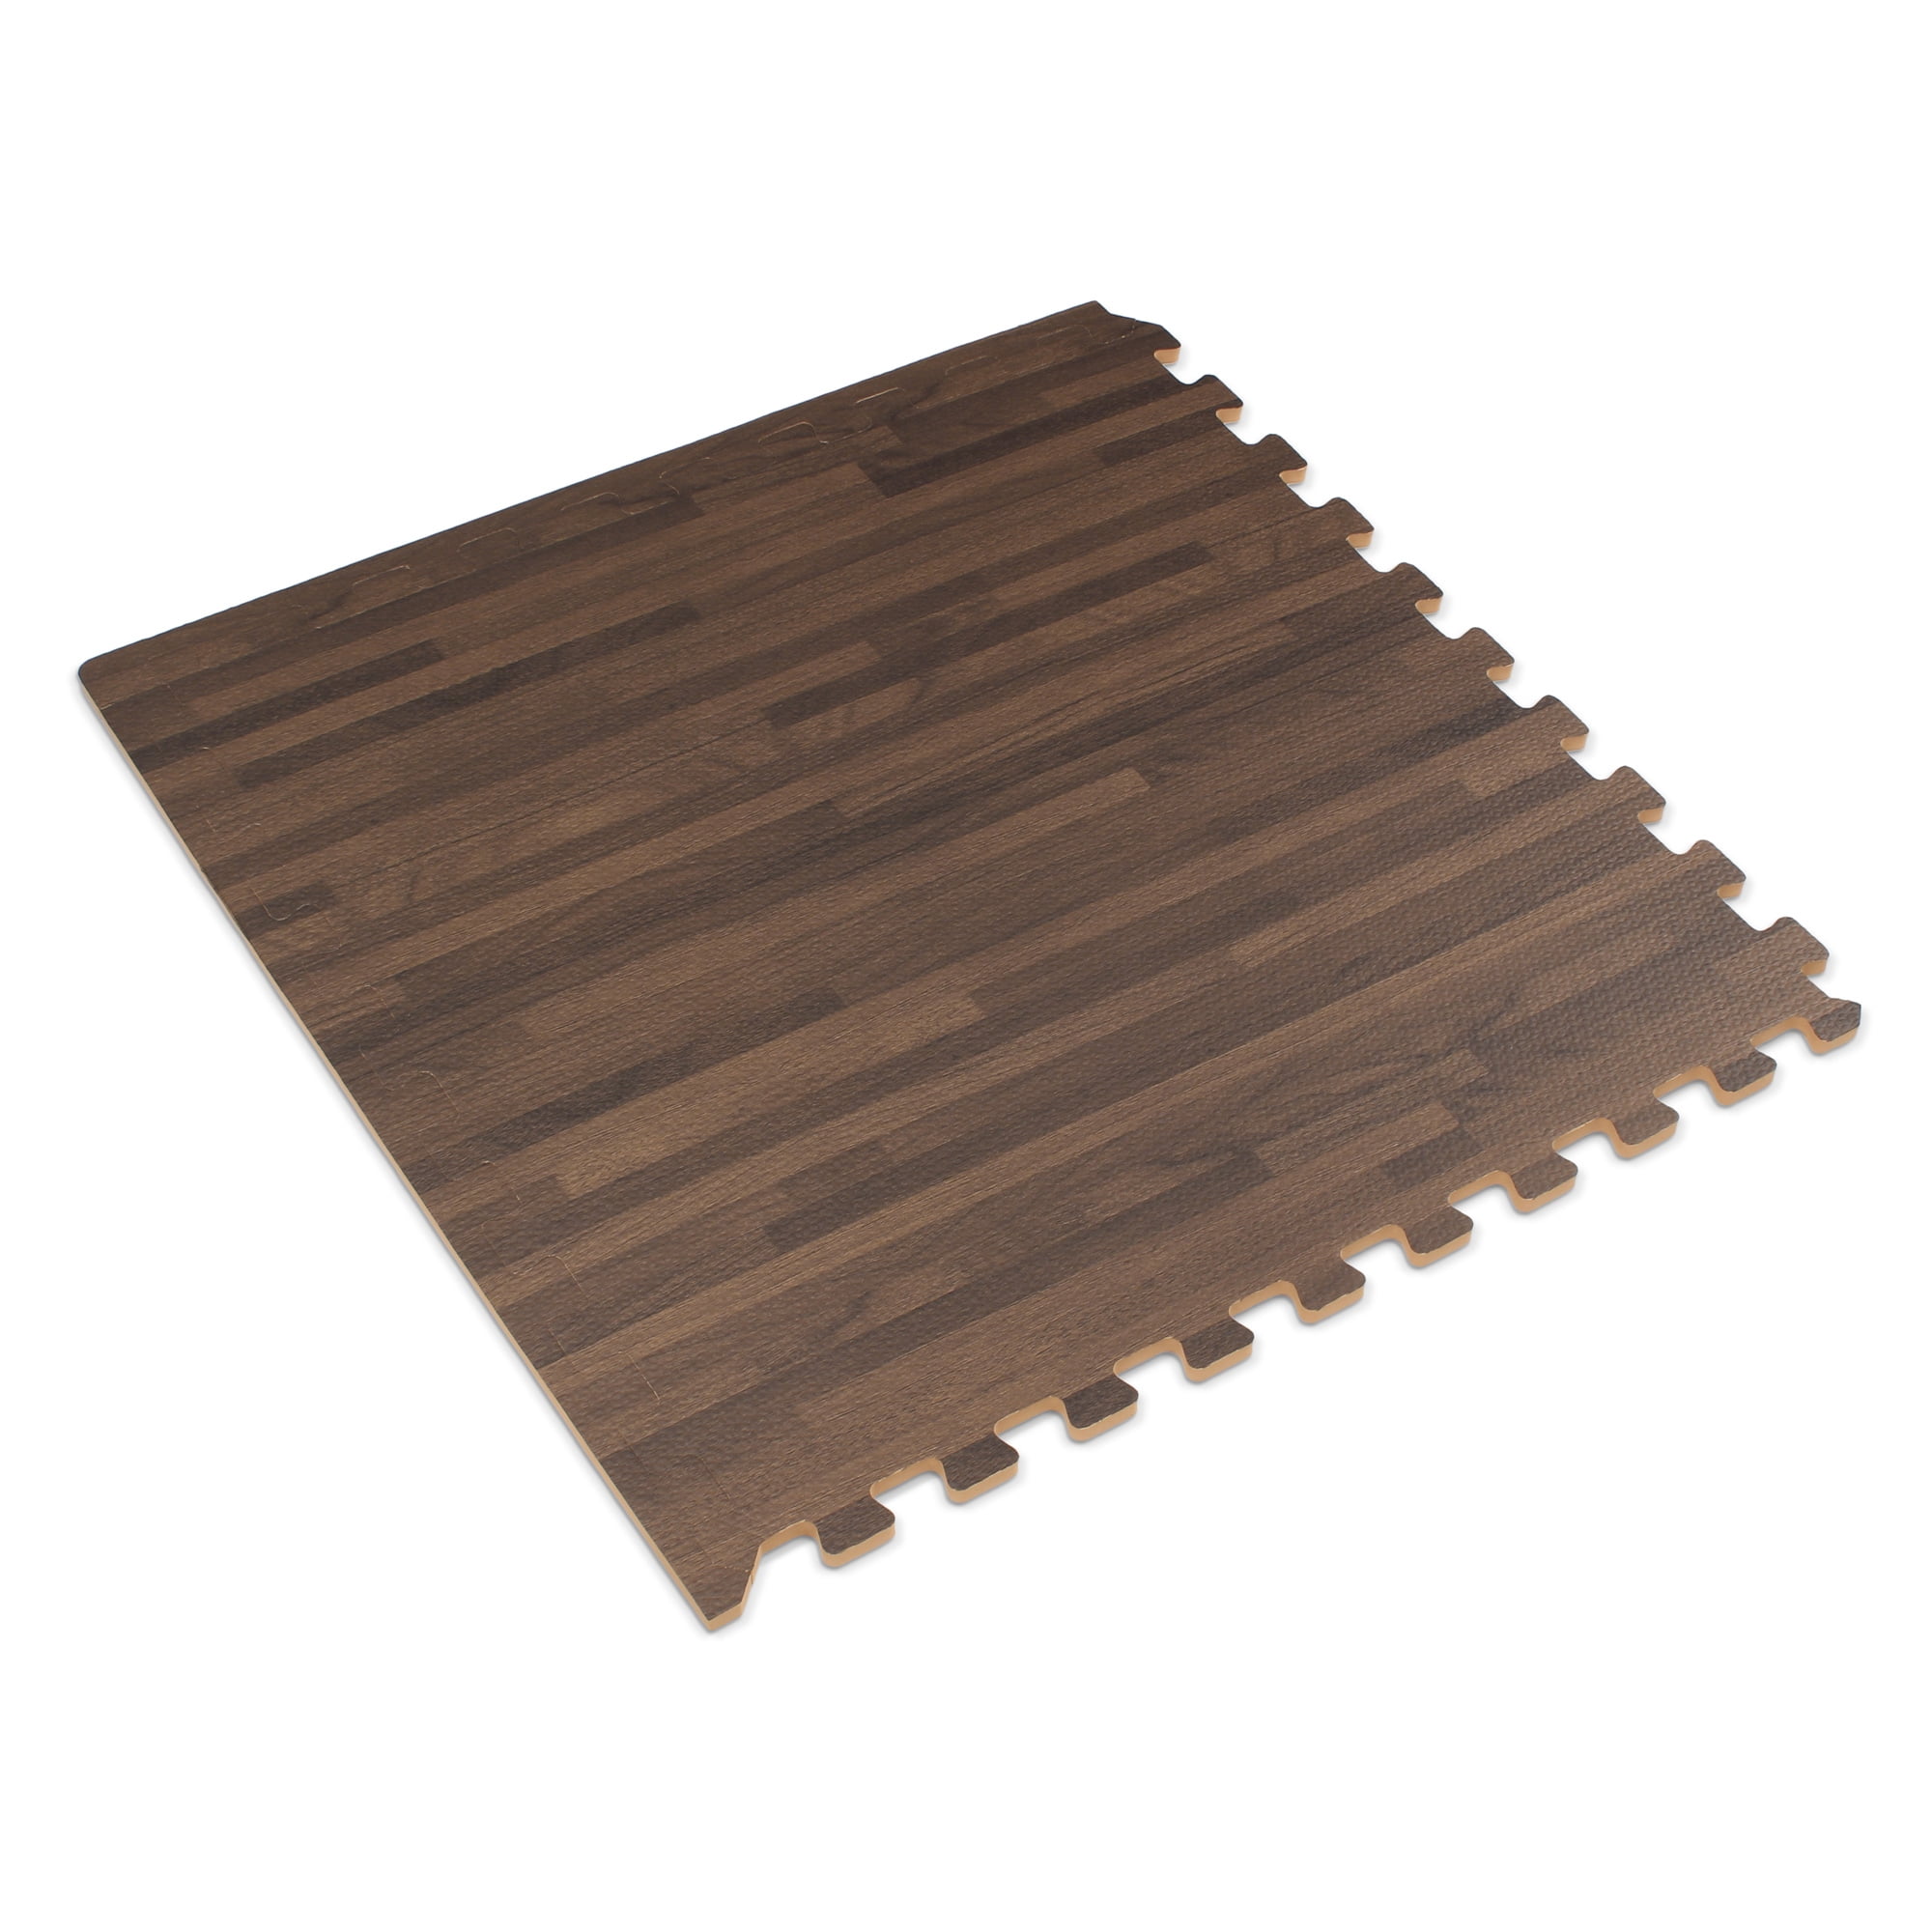 144 ft walnut dark wood grain interlocking foam puzzle tiles mat puzzle floorin 